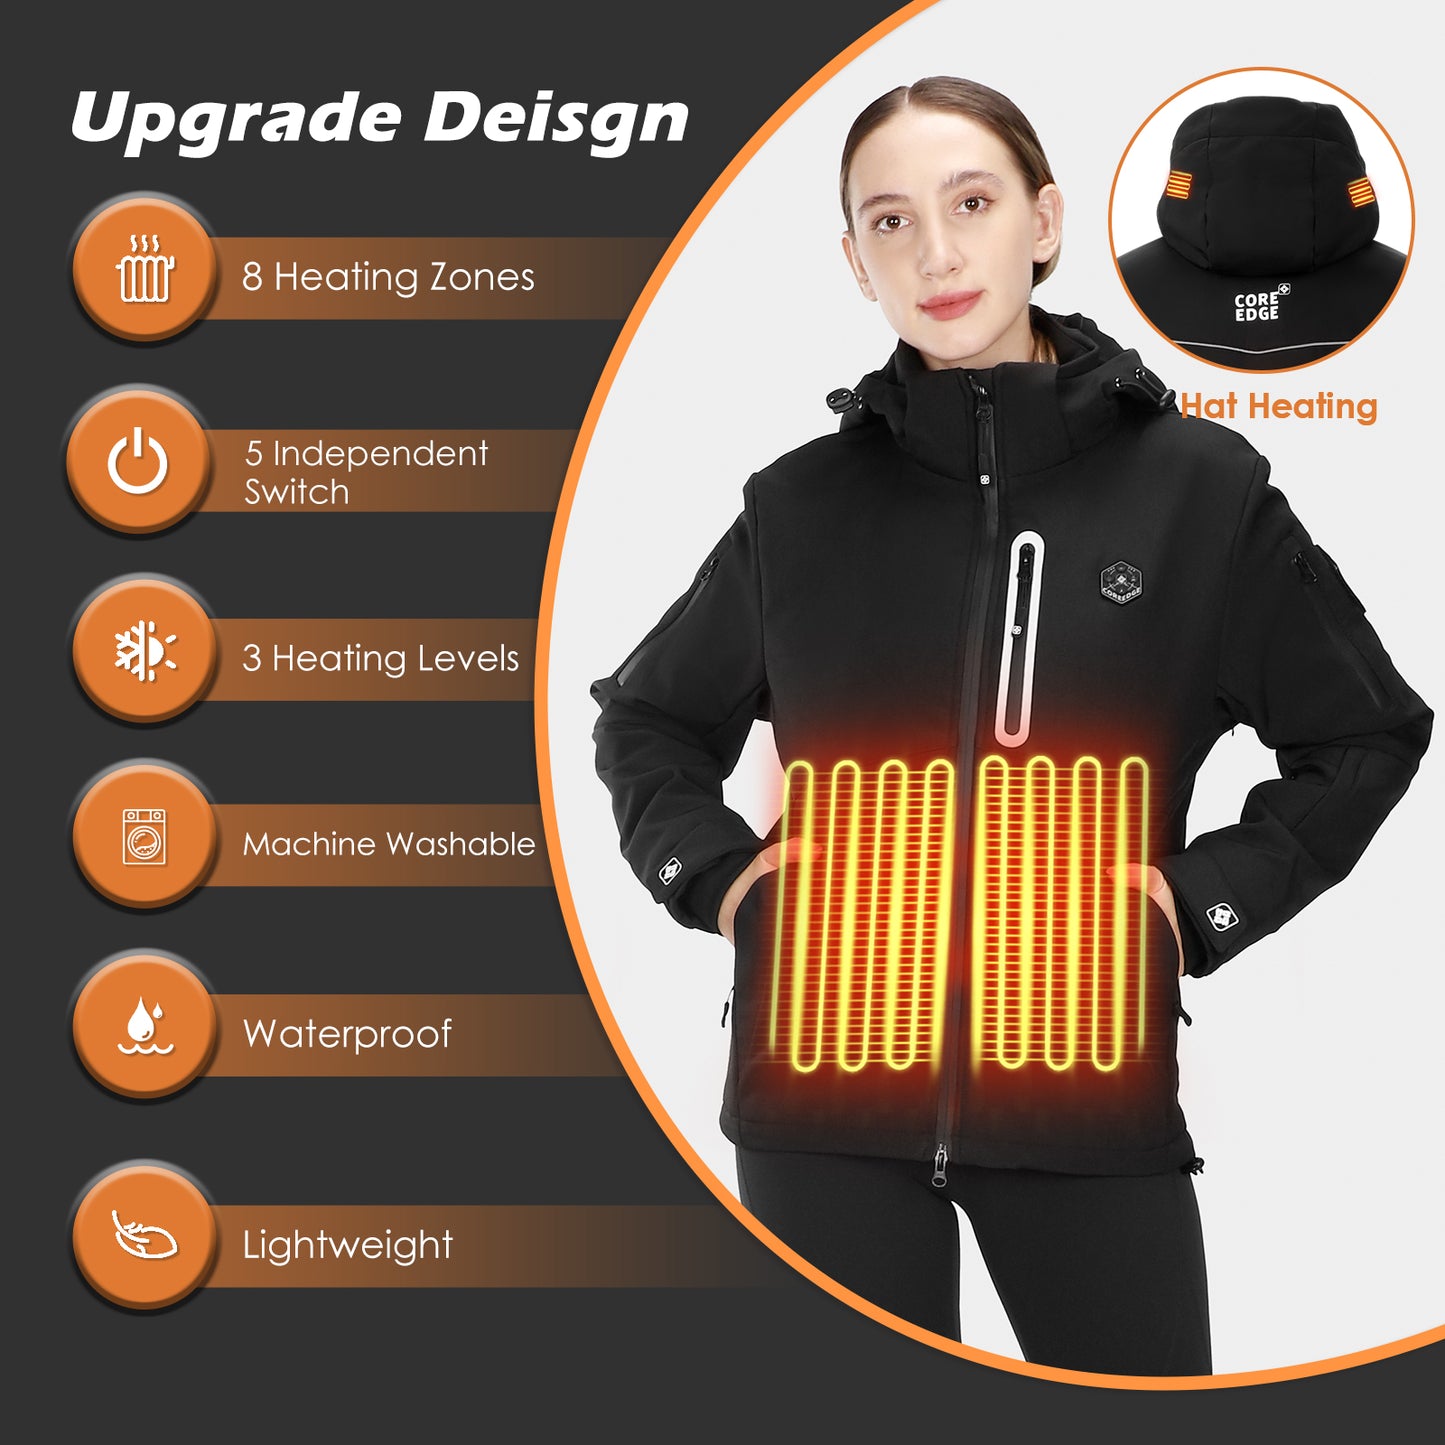 Women's Upgrade Heated Jacket